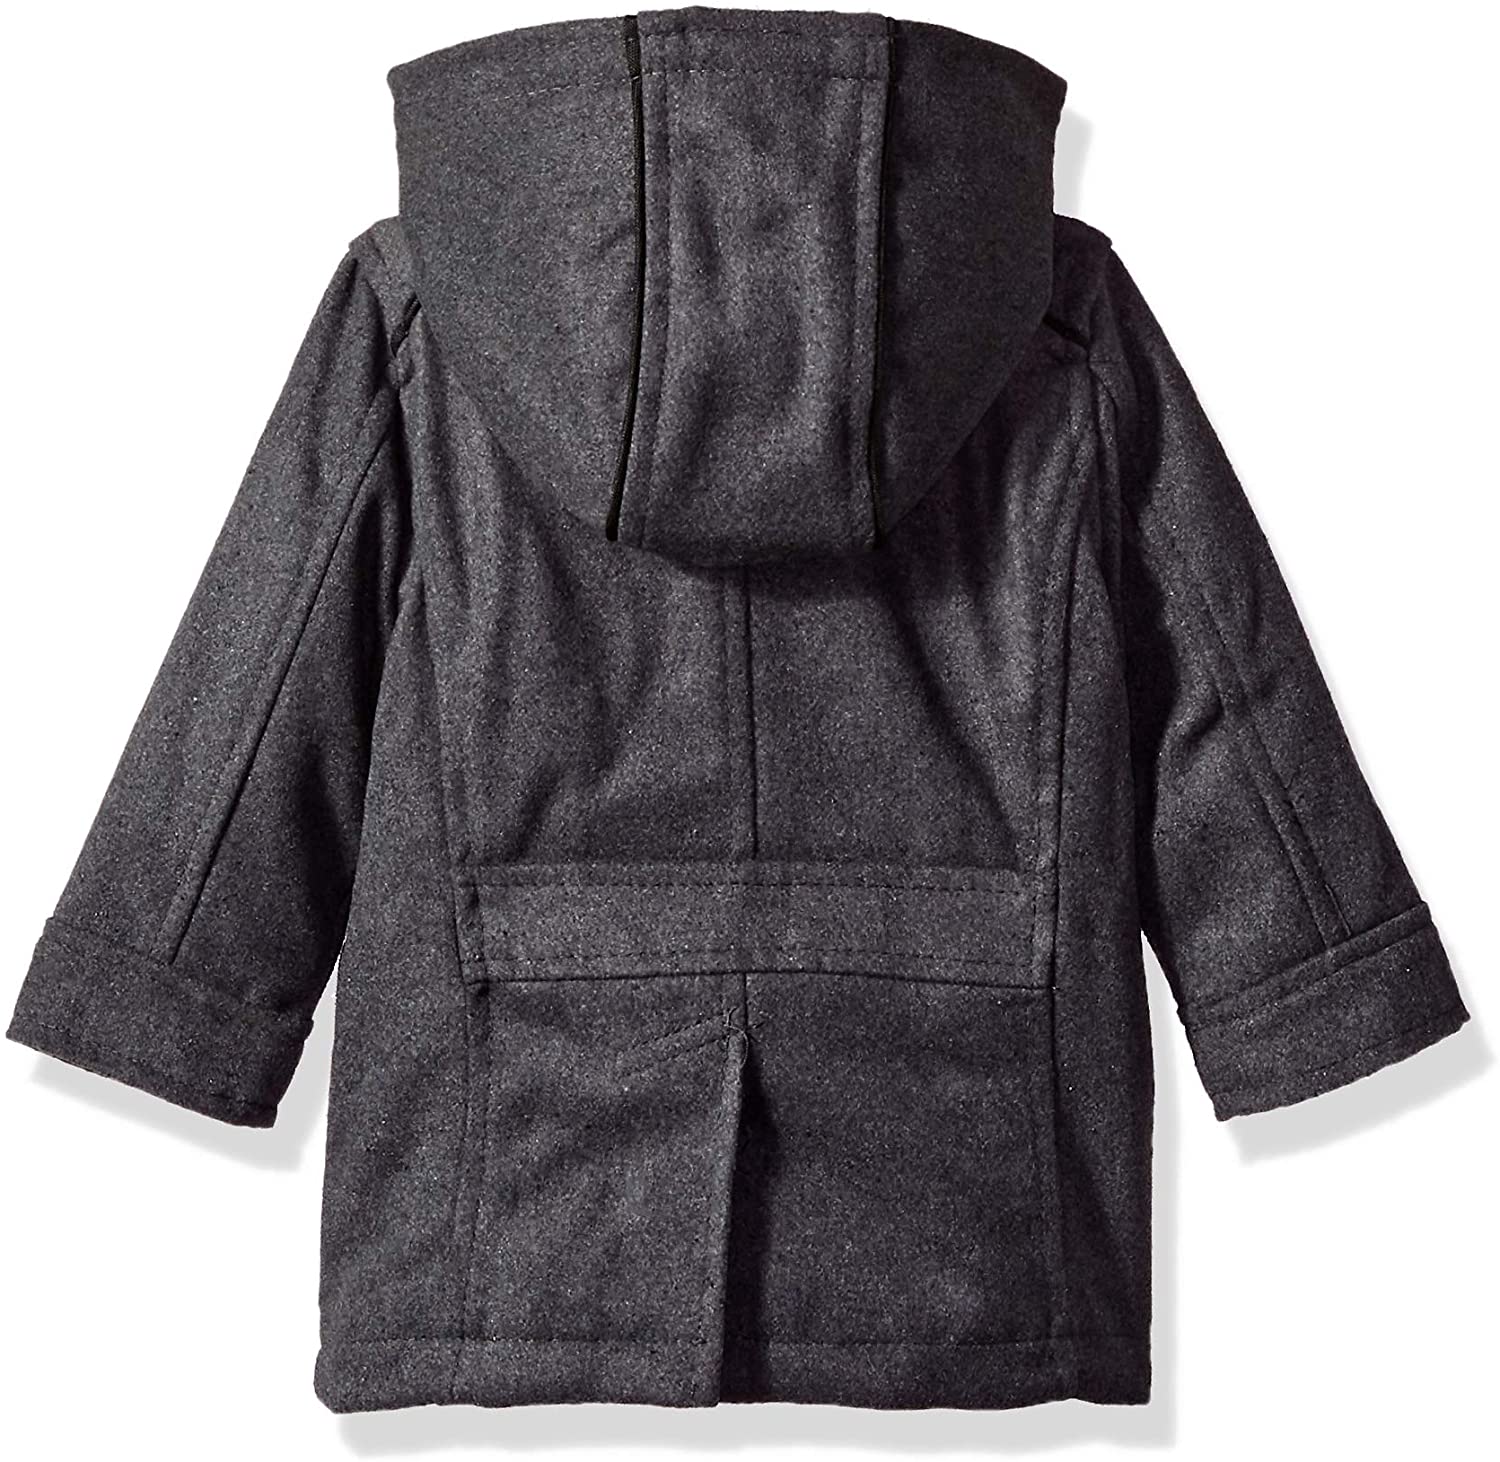 Urban Republic Military Wool Jacket w/ Removable Hood